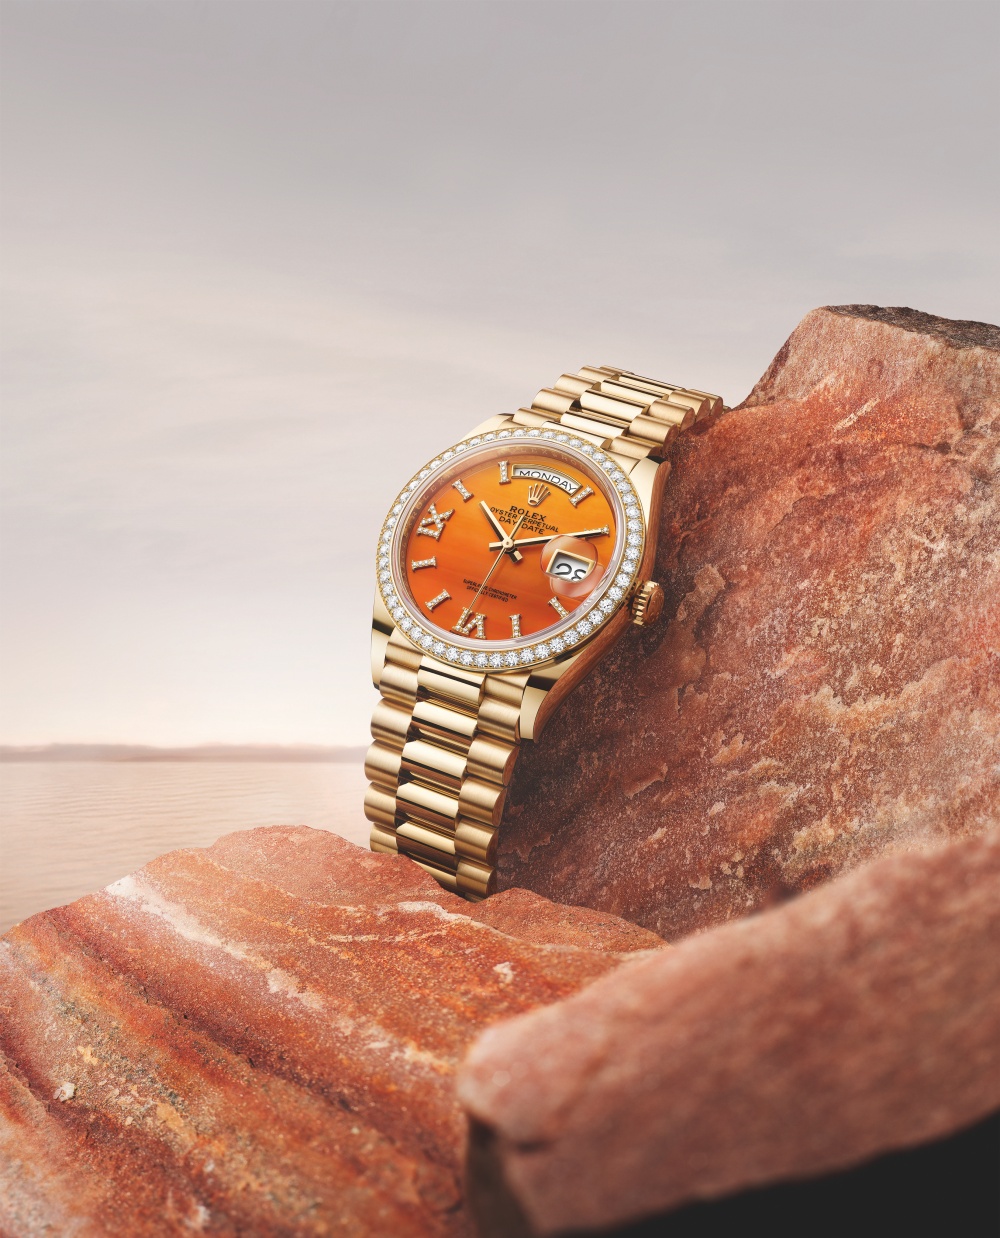  Đồng hồ Oyster Perpetual Day-Date 36, mặt số đá carnelian màu cam 